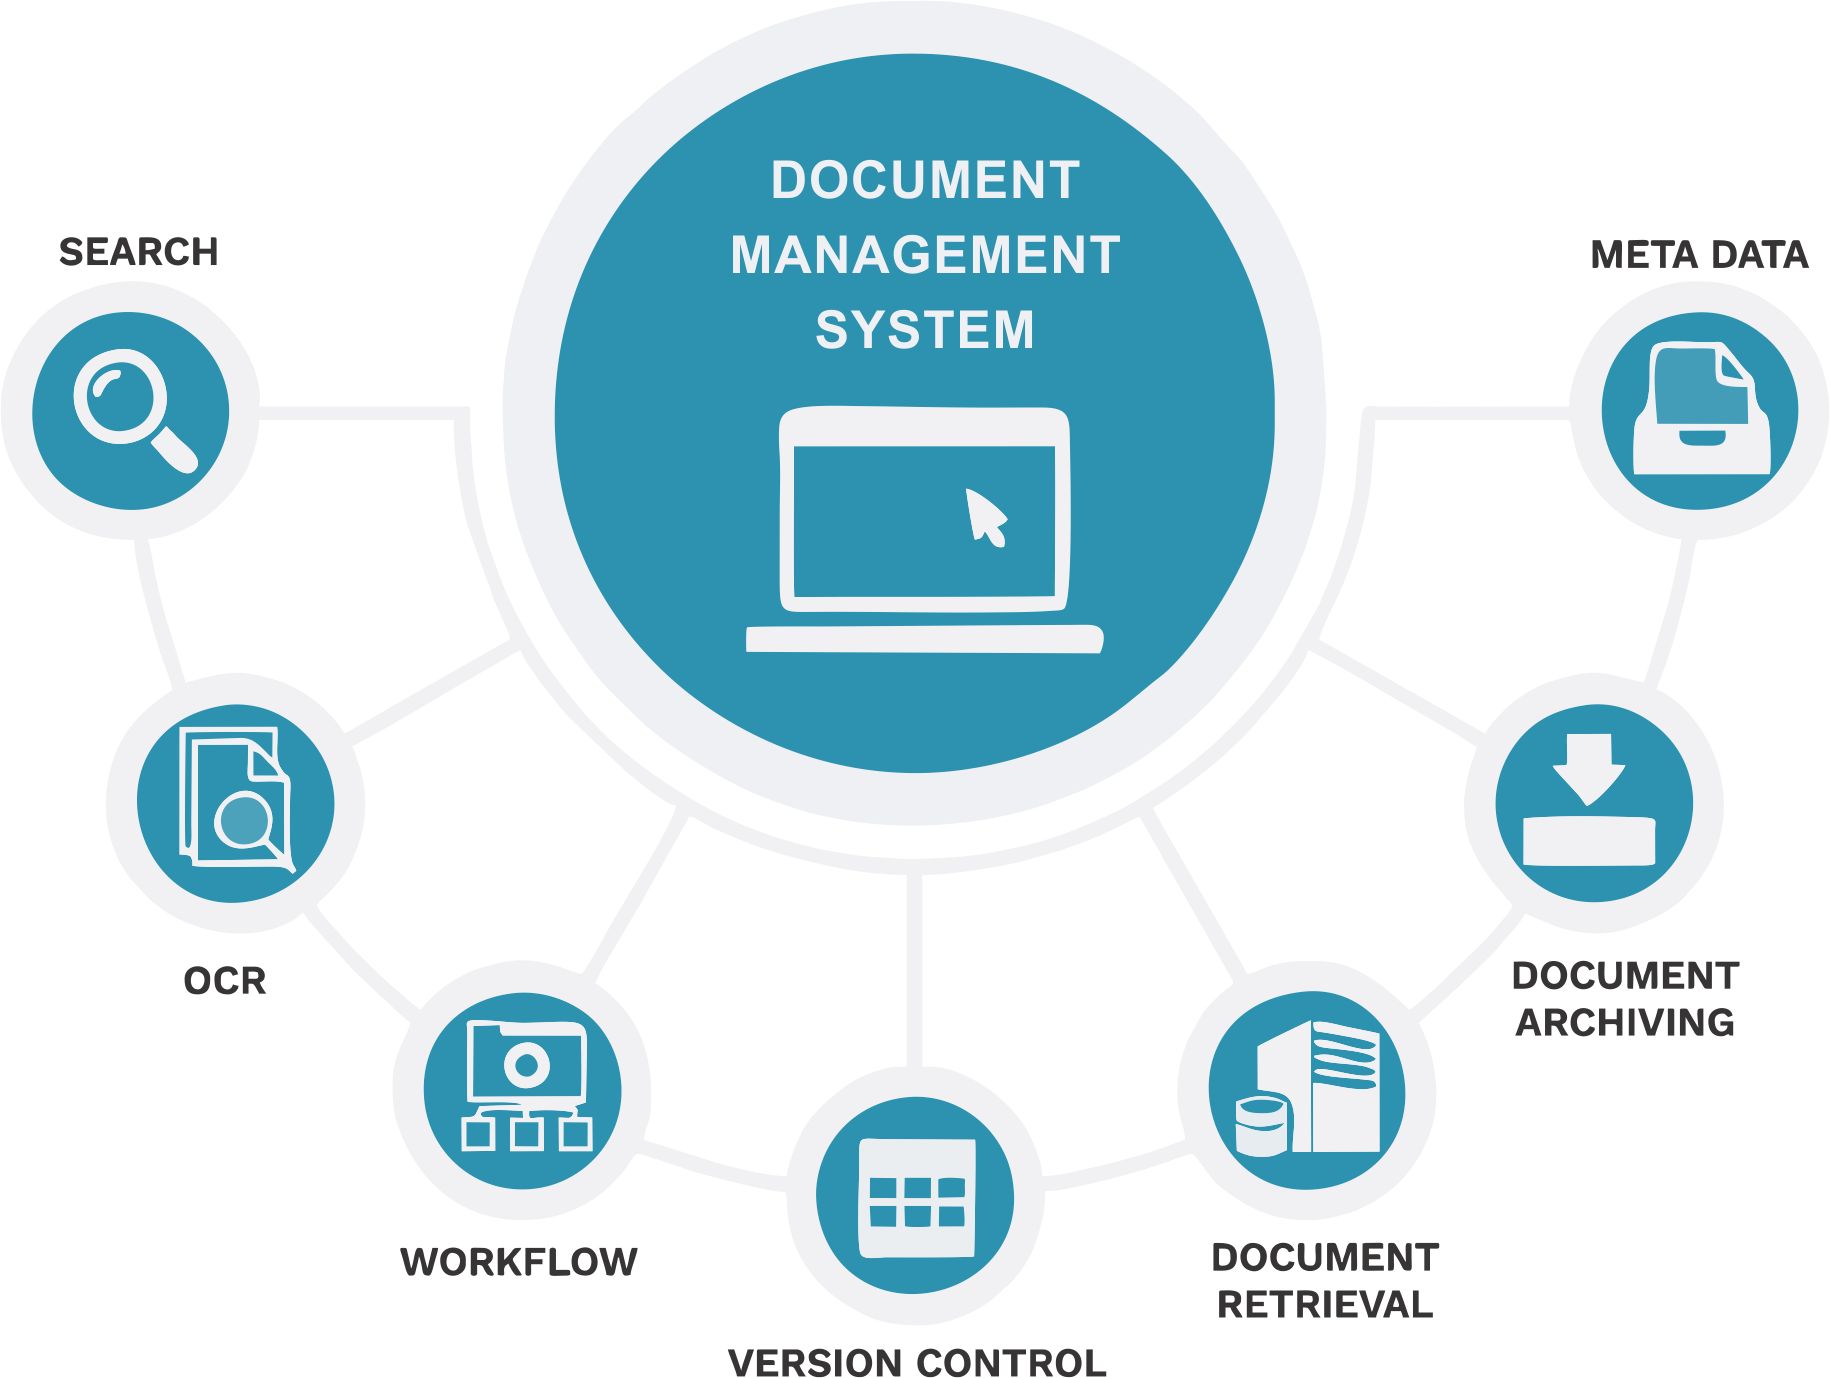 Document management system